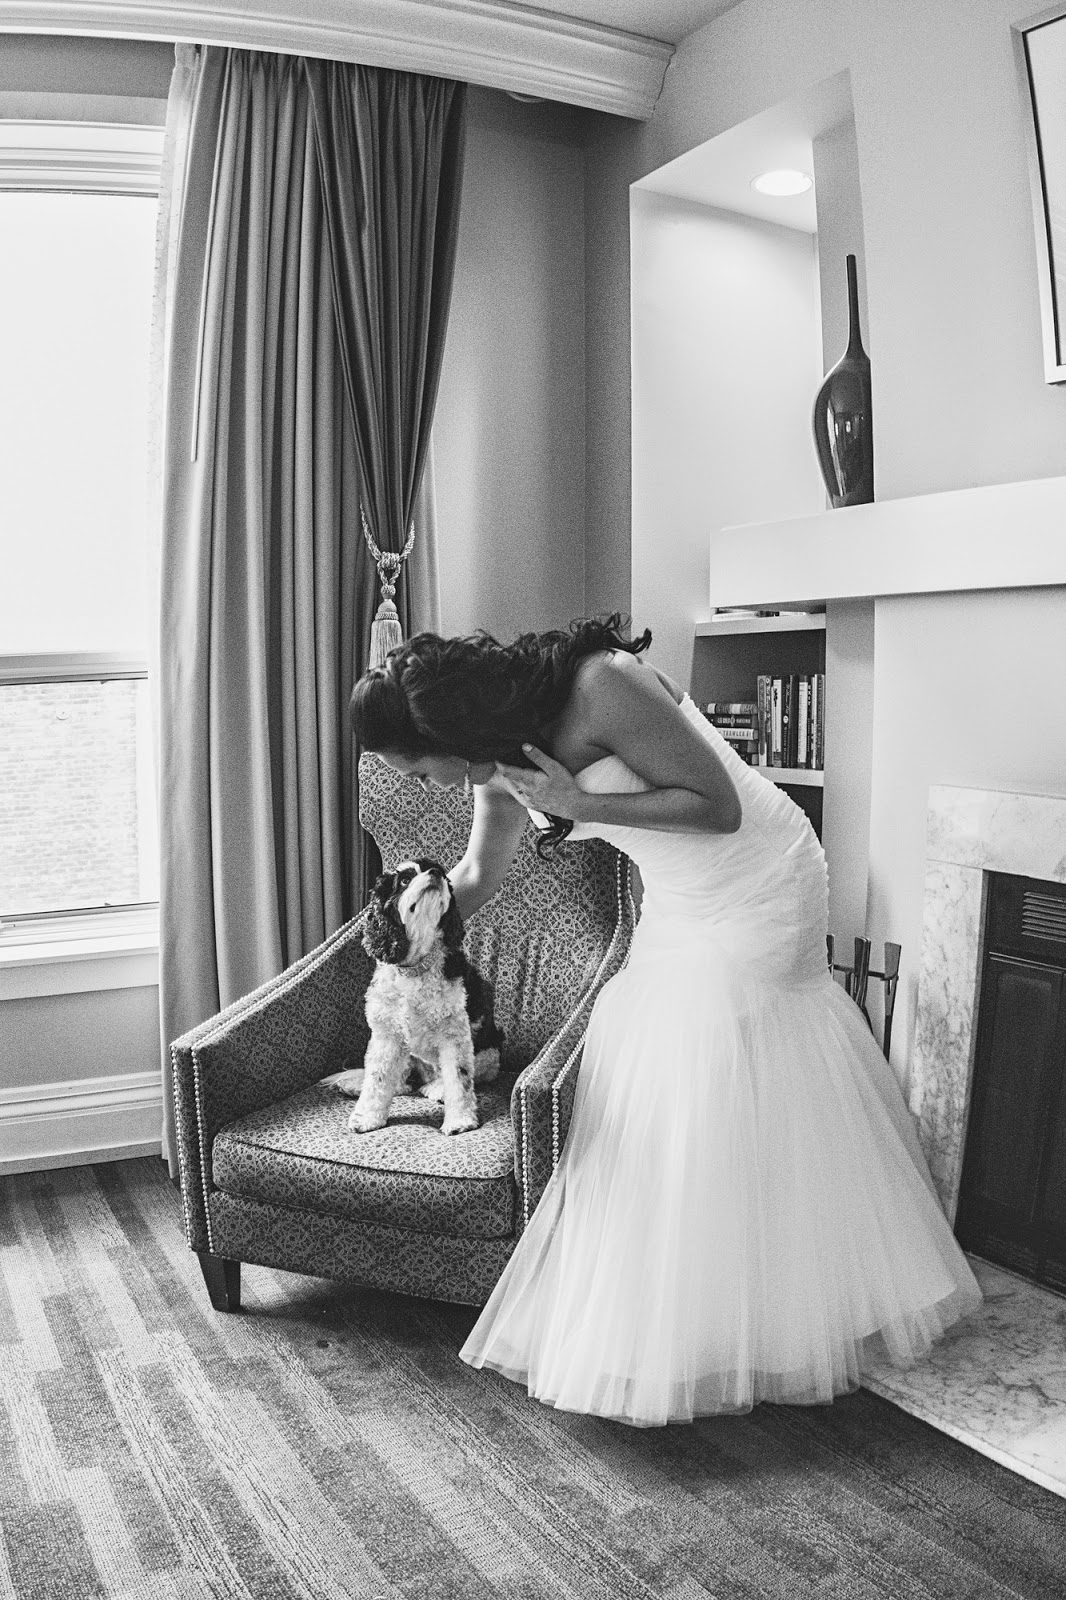 Getting ready wedding photos with puppy - cultivatedrambler.com